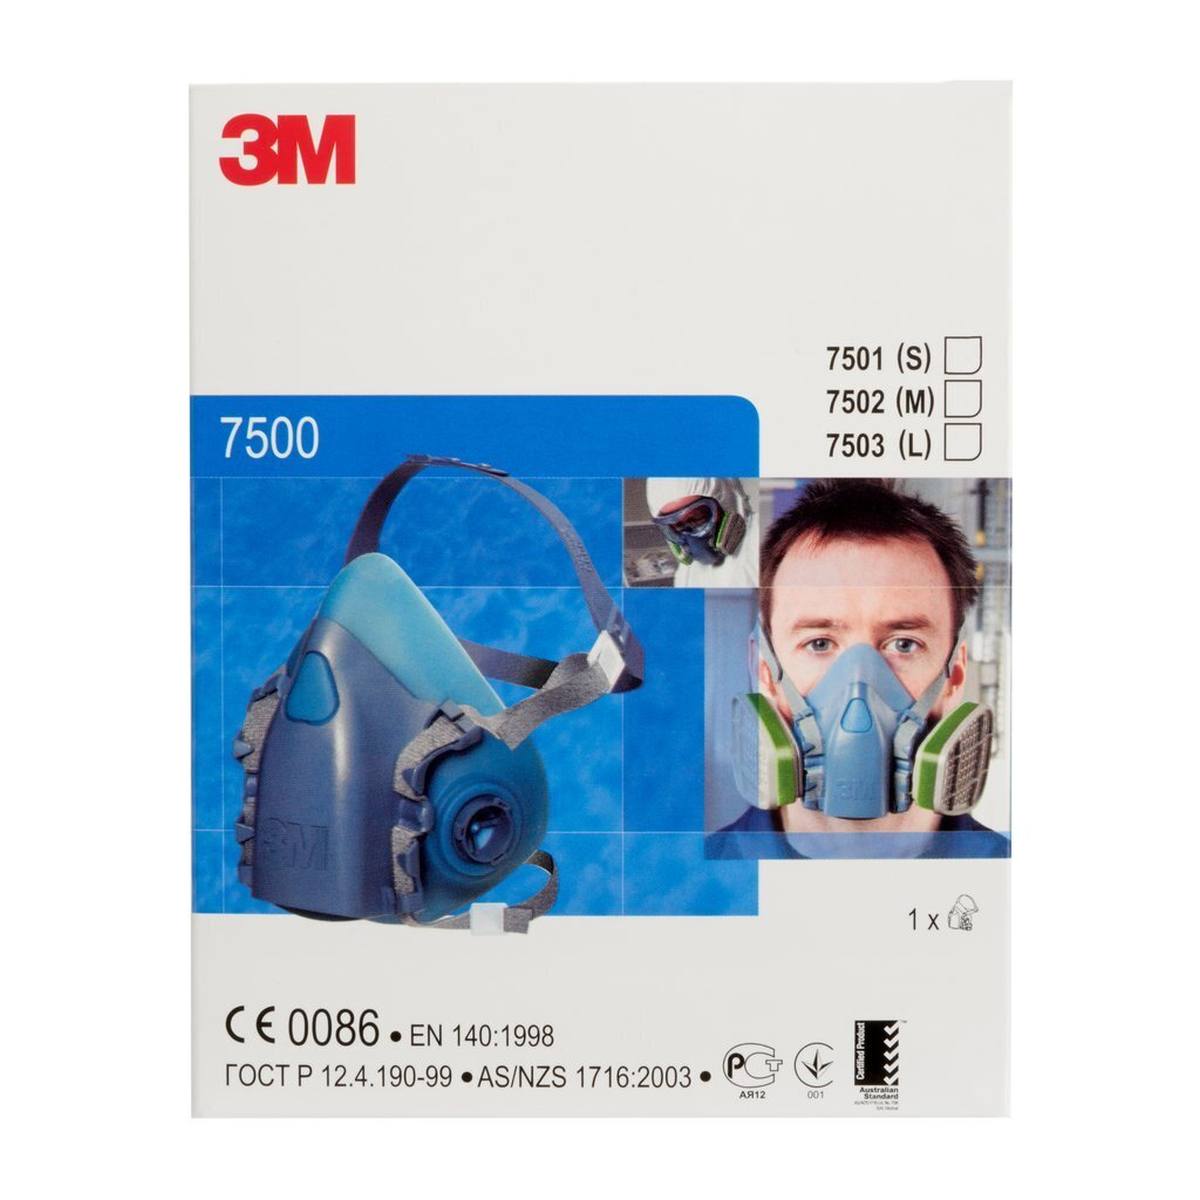 Corps de demi-masque 3M 7501S silicone / polyester thermoplastique taille S